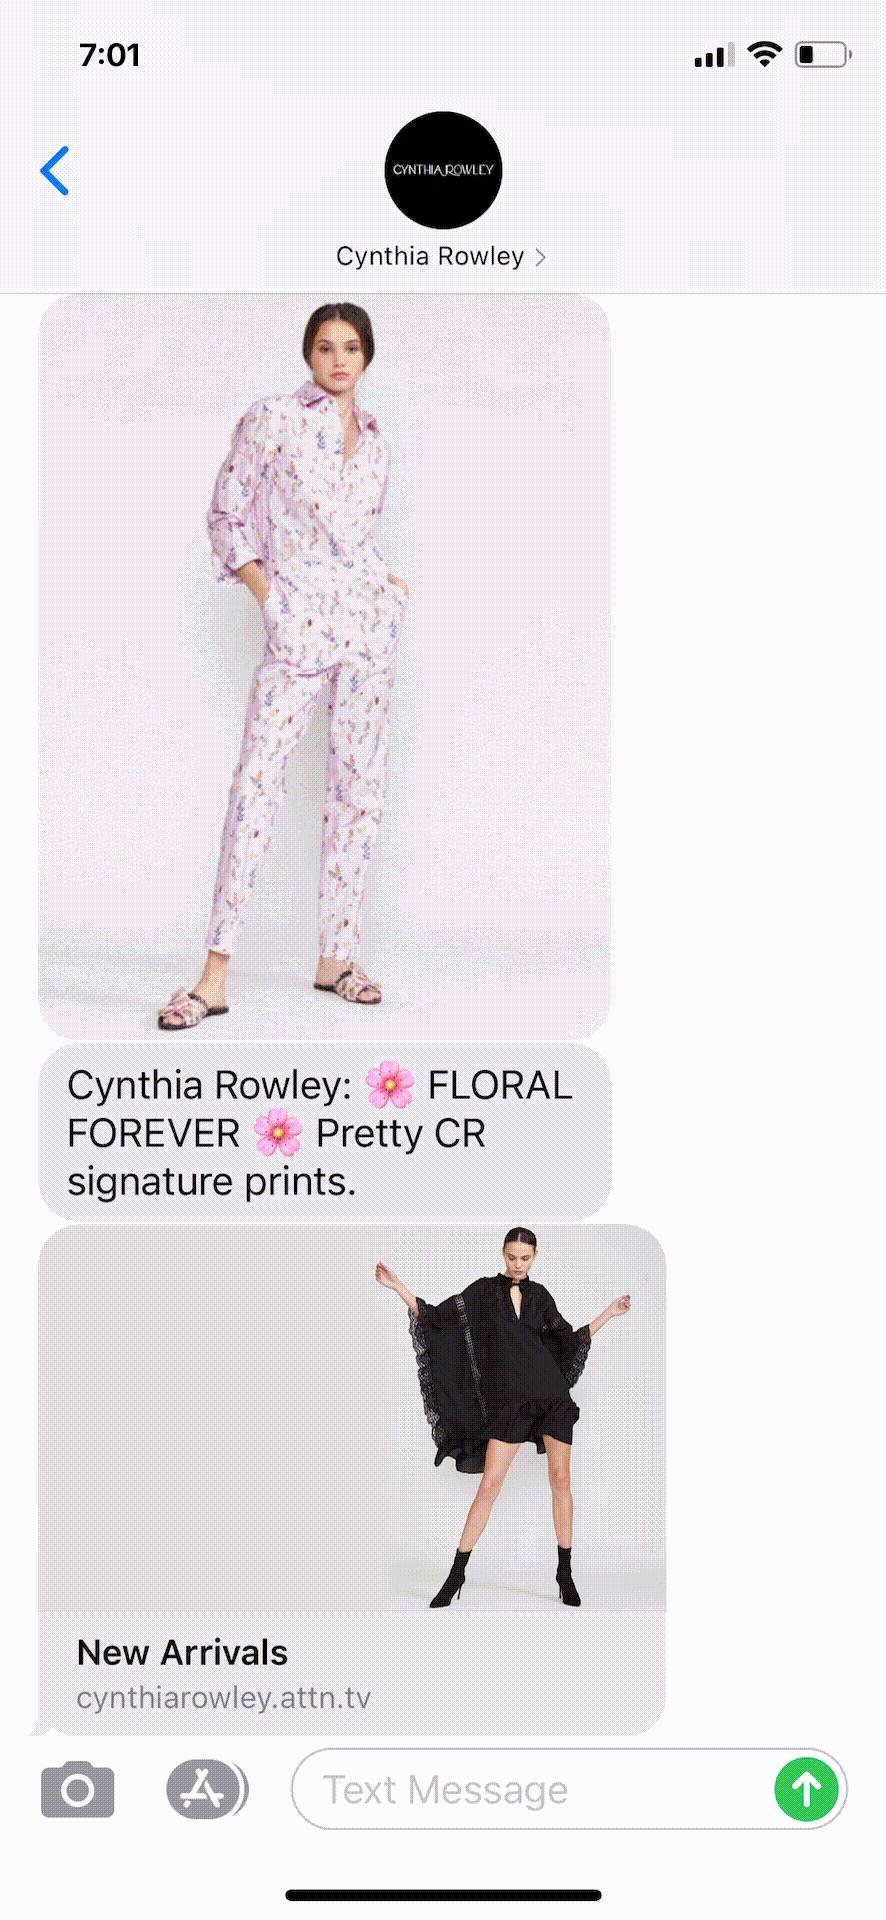 Cynthia-Rowley-Text-Message-Marketing-Example-07.30.2020